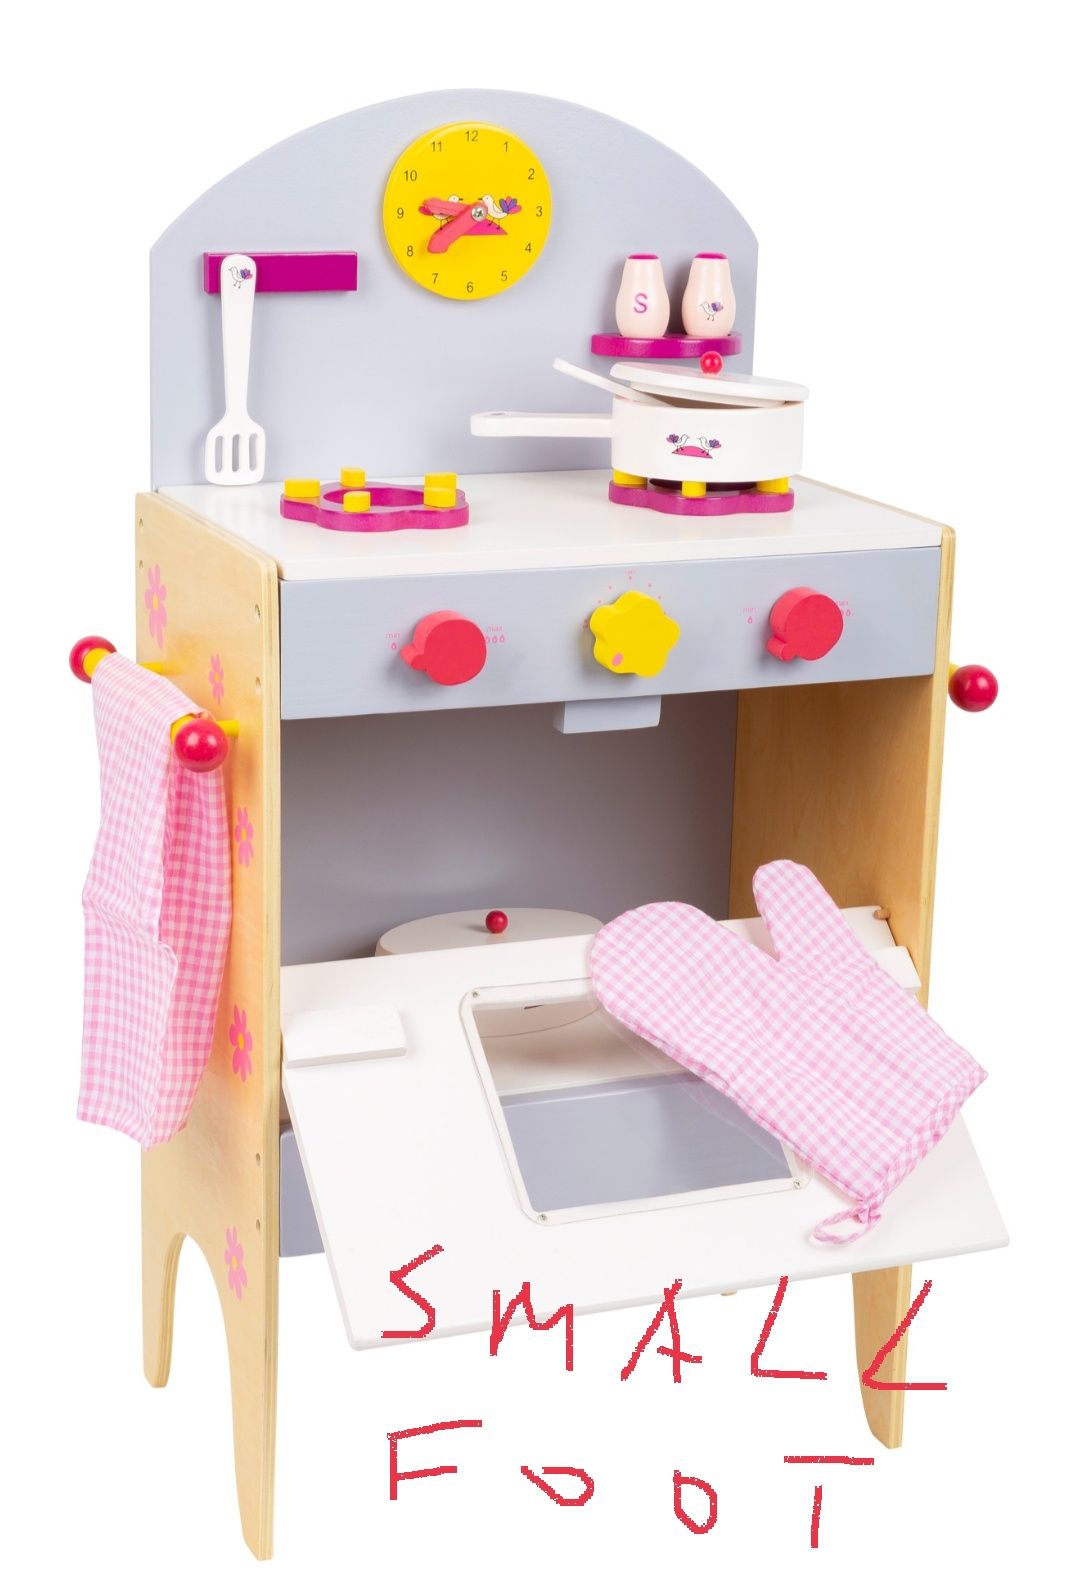 Kuchnia drewniana zabawkowa Small foot kuchenka dla dziecka prezent